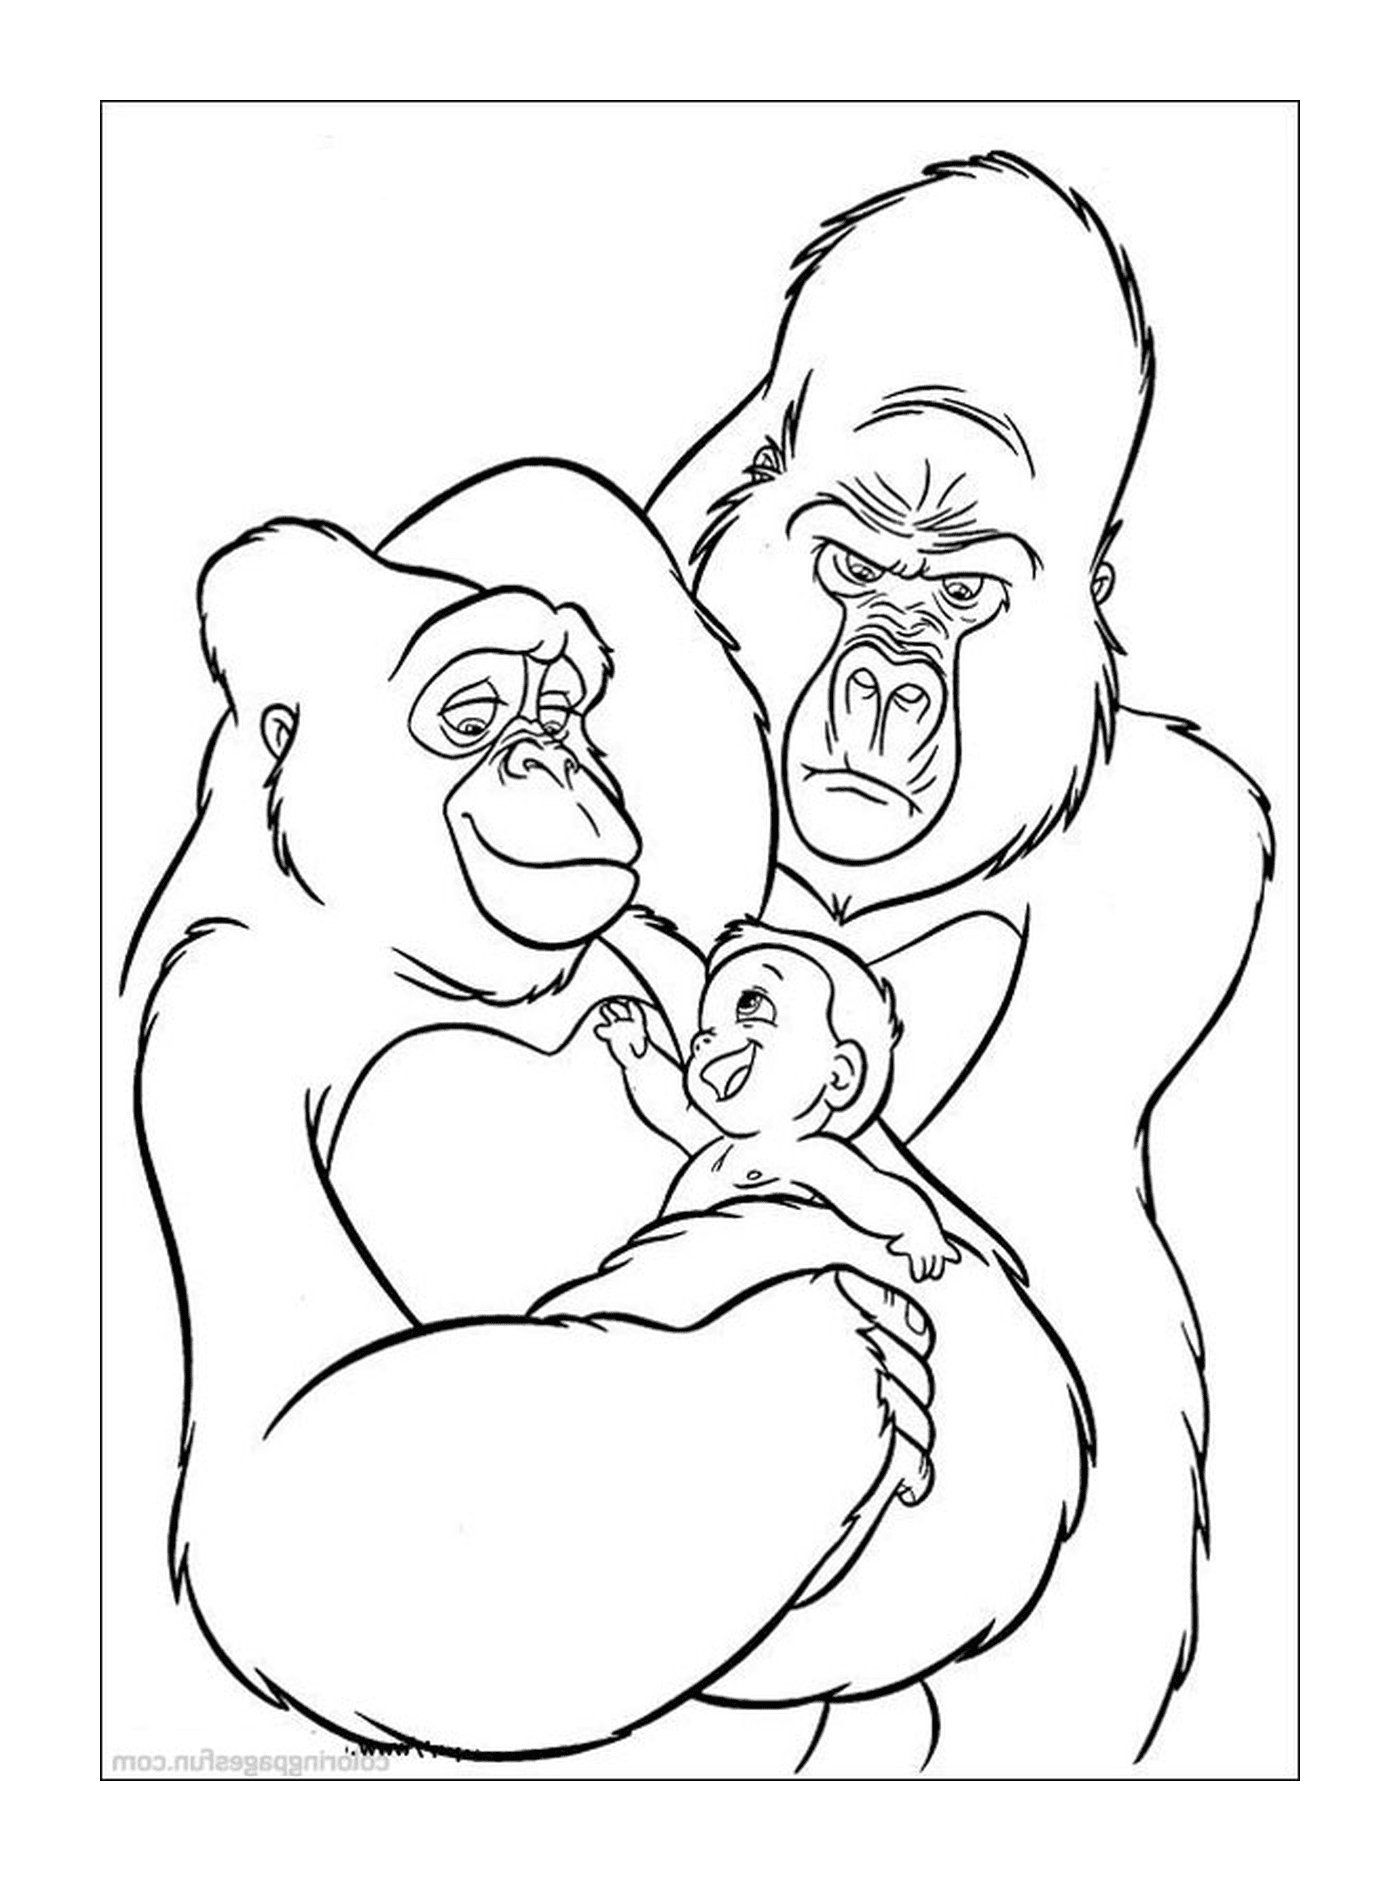  Gorilla and baby gorilla 